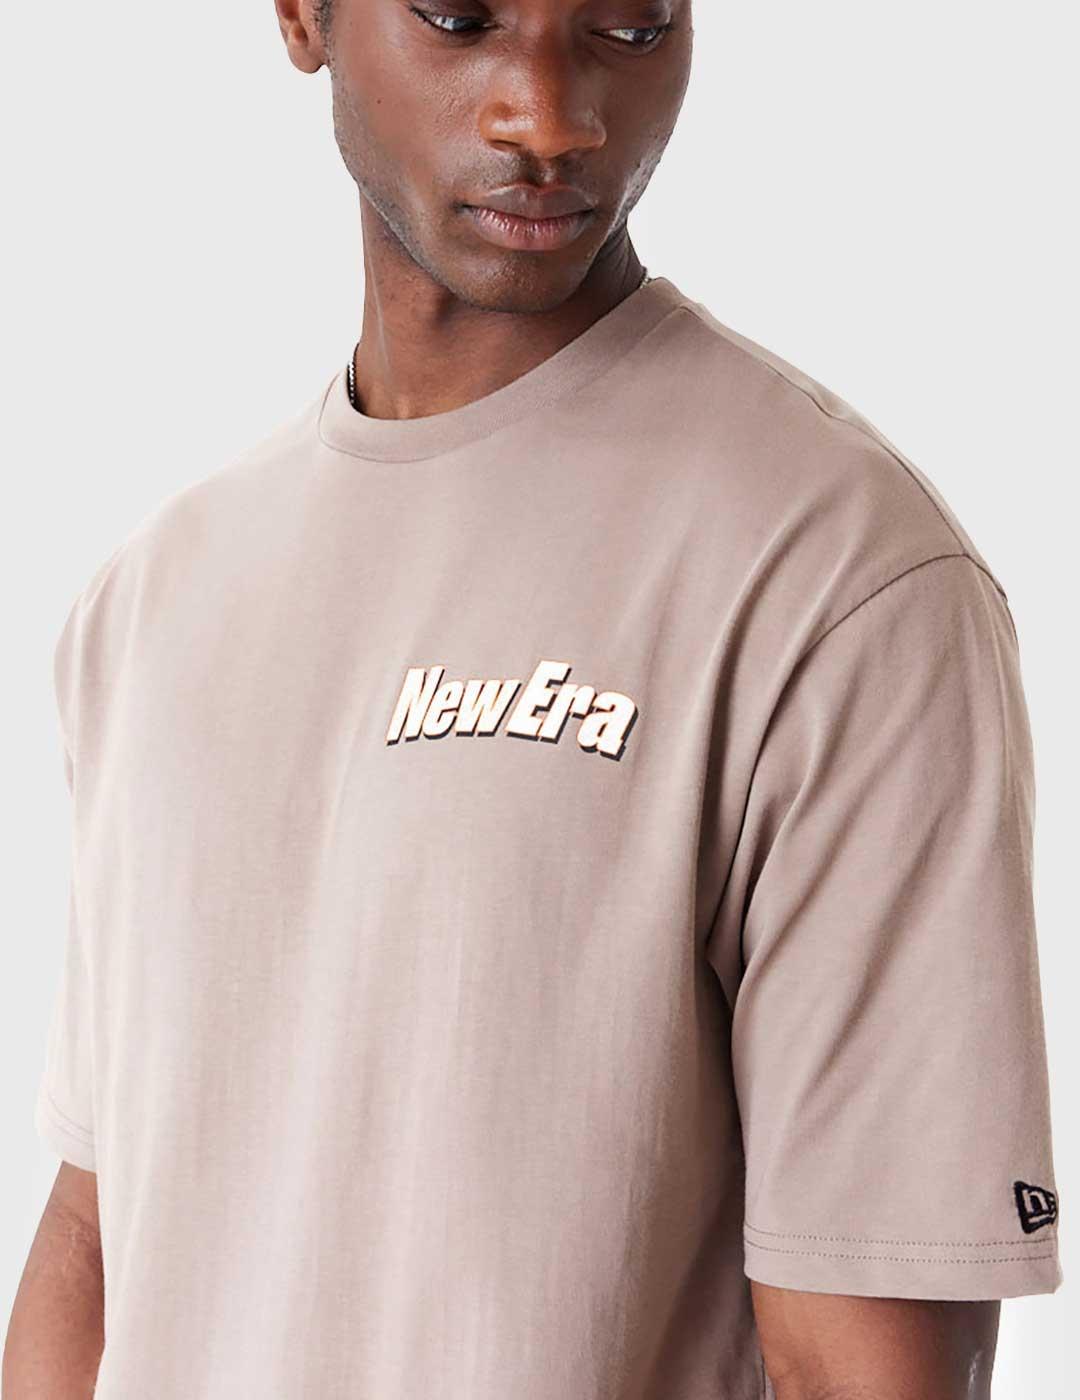 New Era Chaaracter Graphic Camiseta marrón para hombre